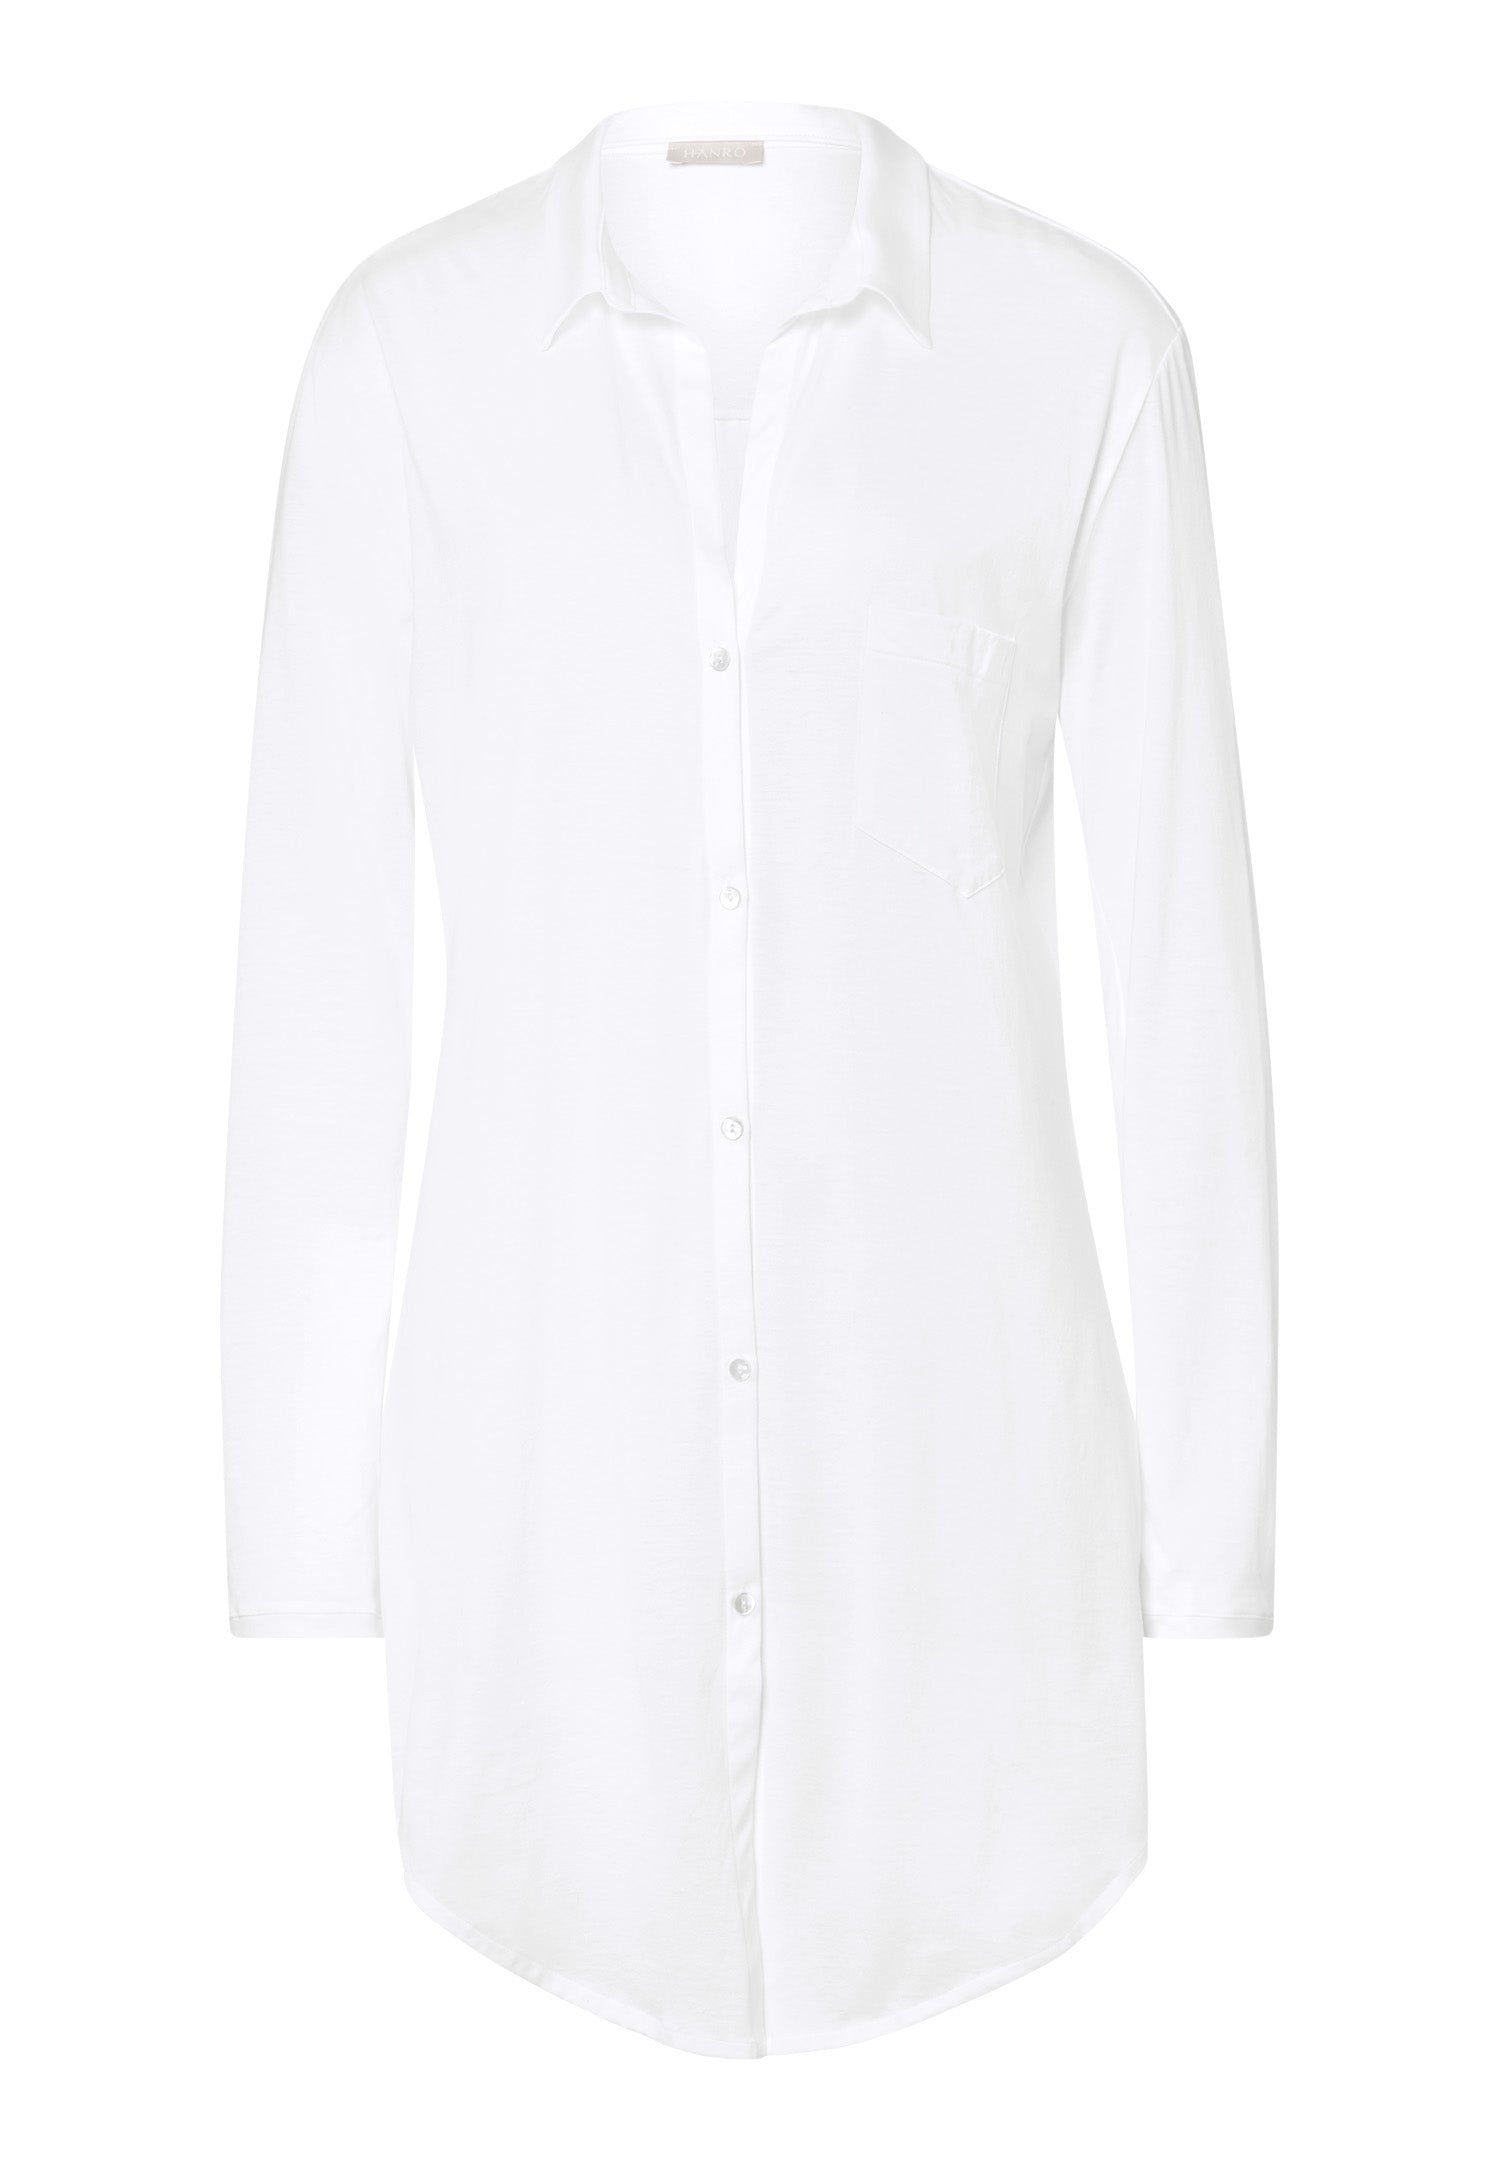 HANRO White Cotton Deluxe Long Sleeve Nightshirt